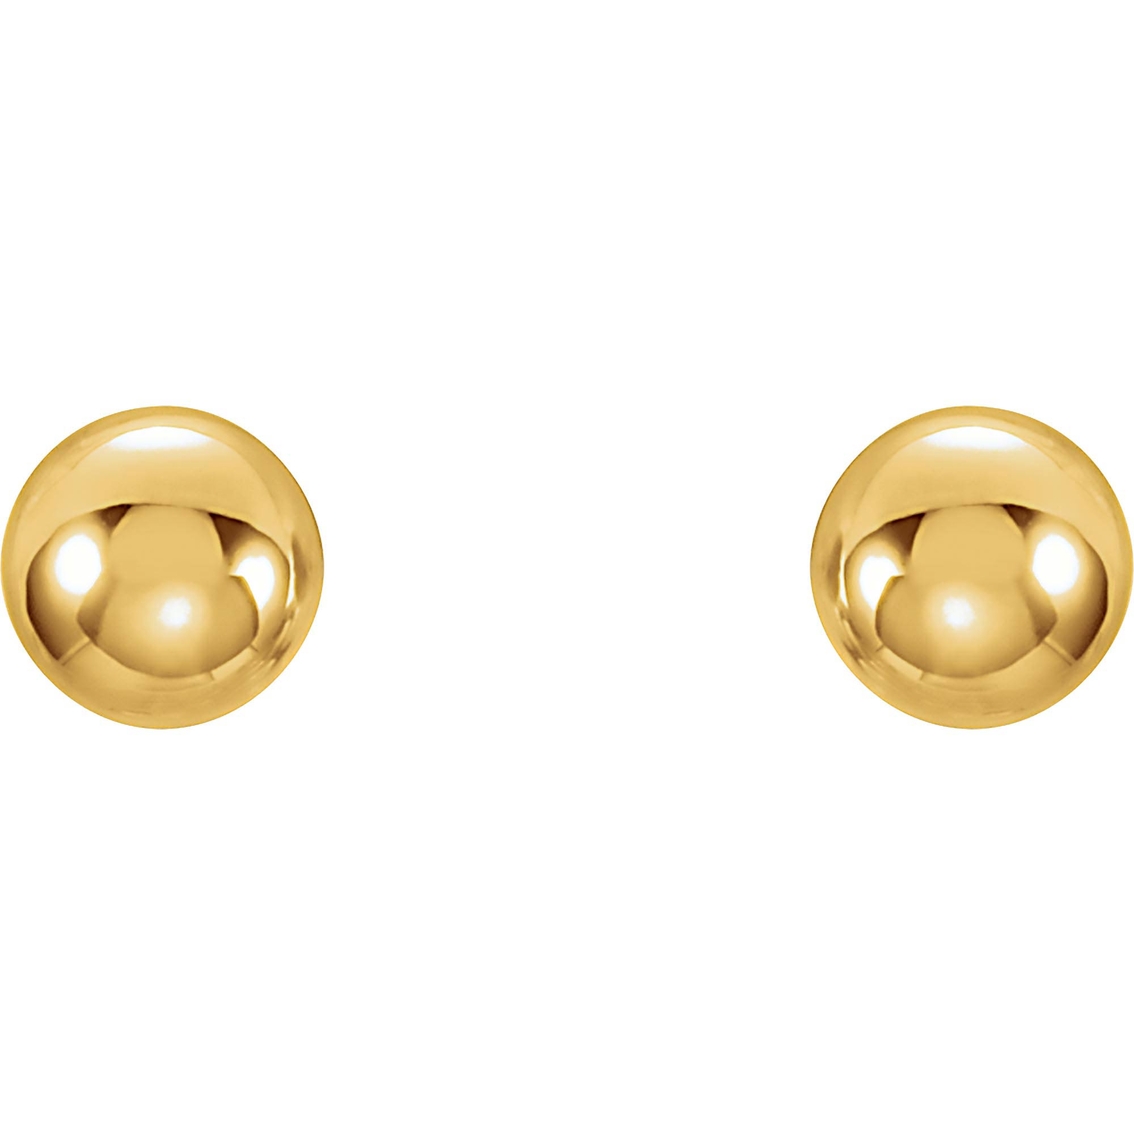 Karat Kids 14K Yellow Gold 4mm Ball Earrings - Image 2 of 3